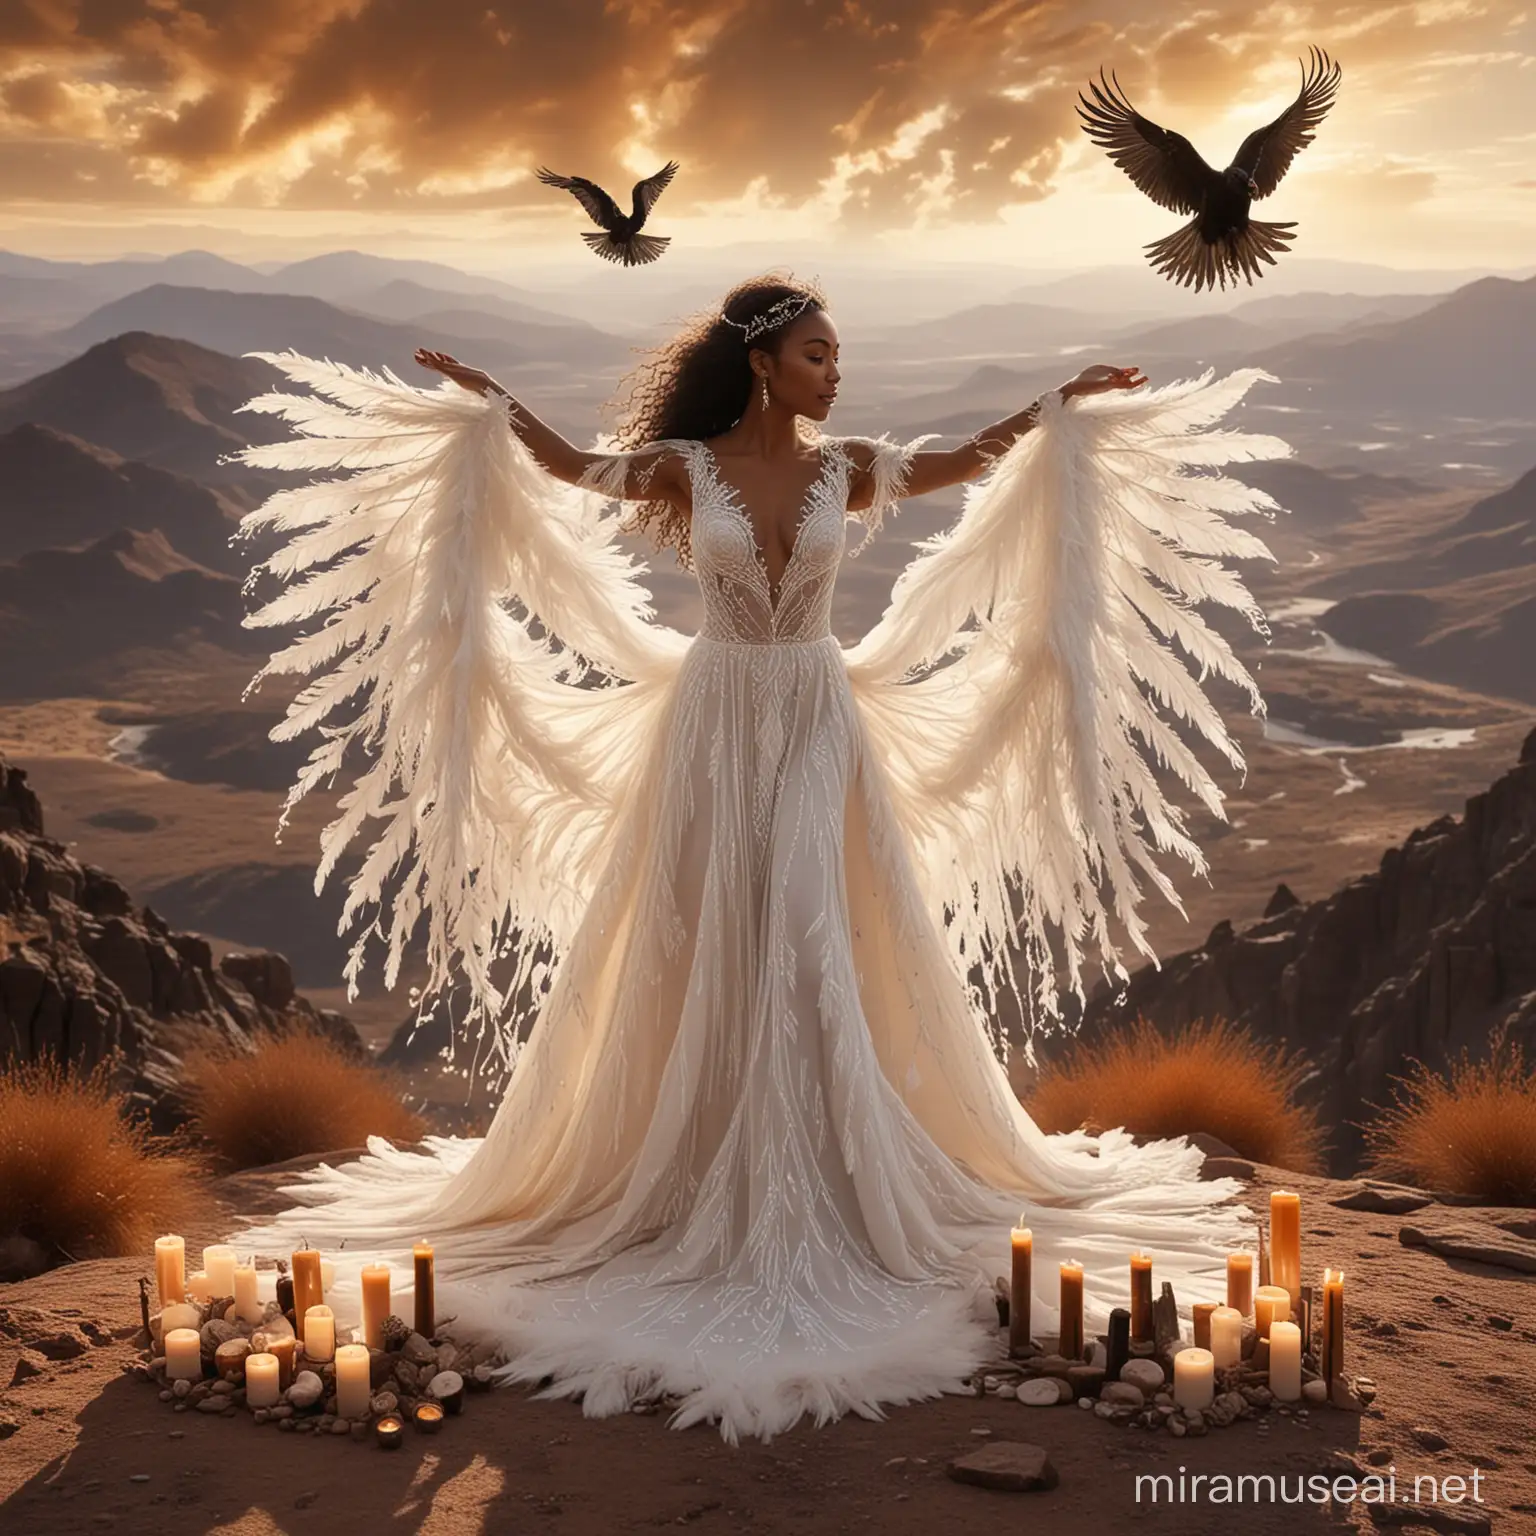 Elegant Black Women in Feathered Wedding Dress Amidst Dessert Runes with Phoenix Bird Soaring Over Mountain